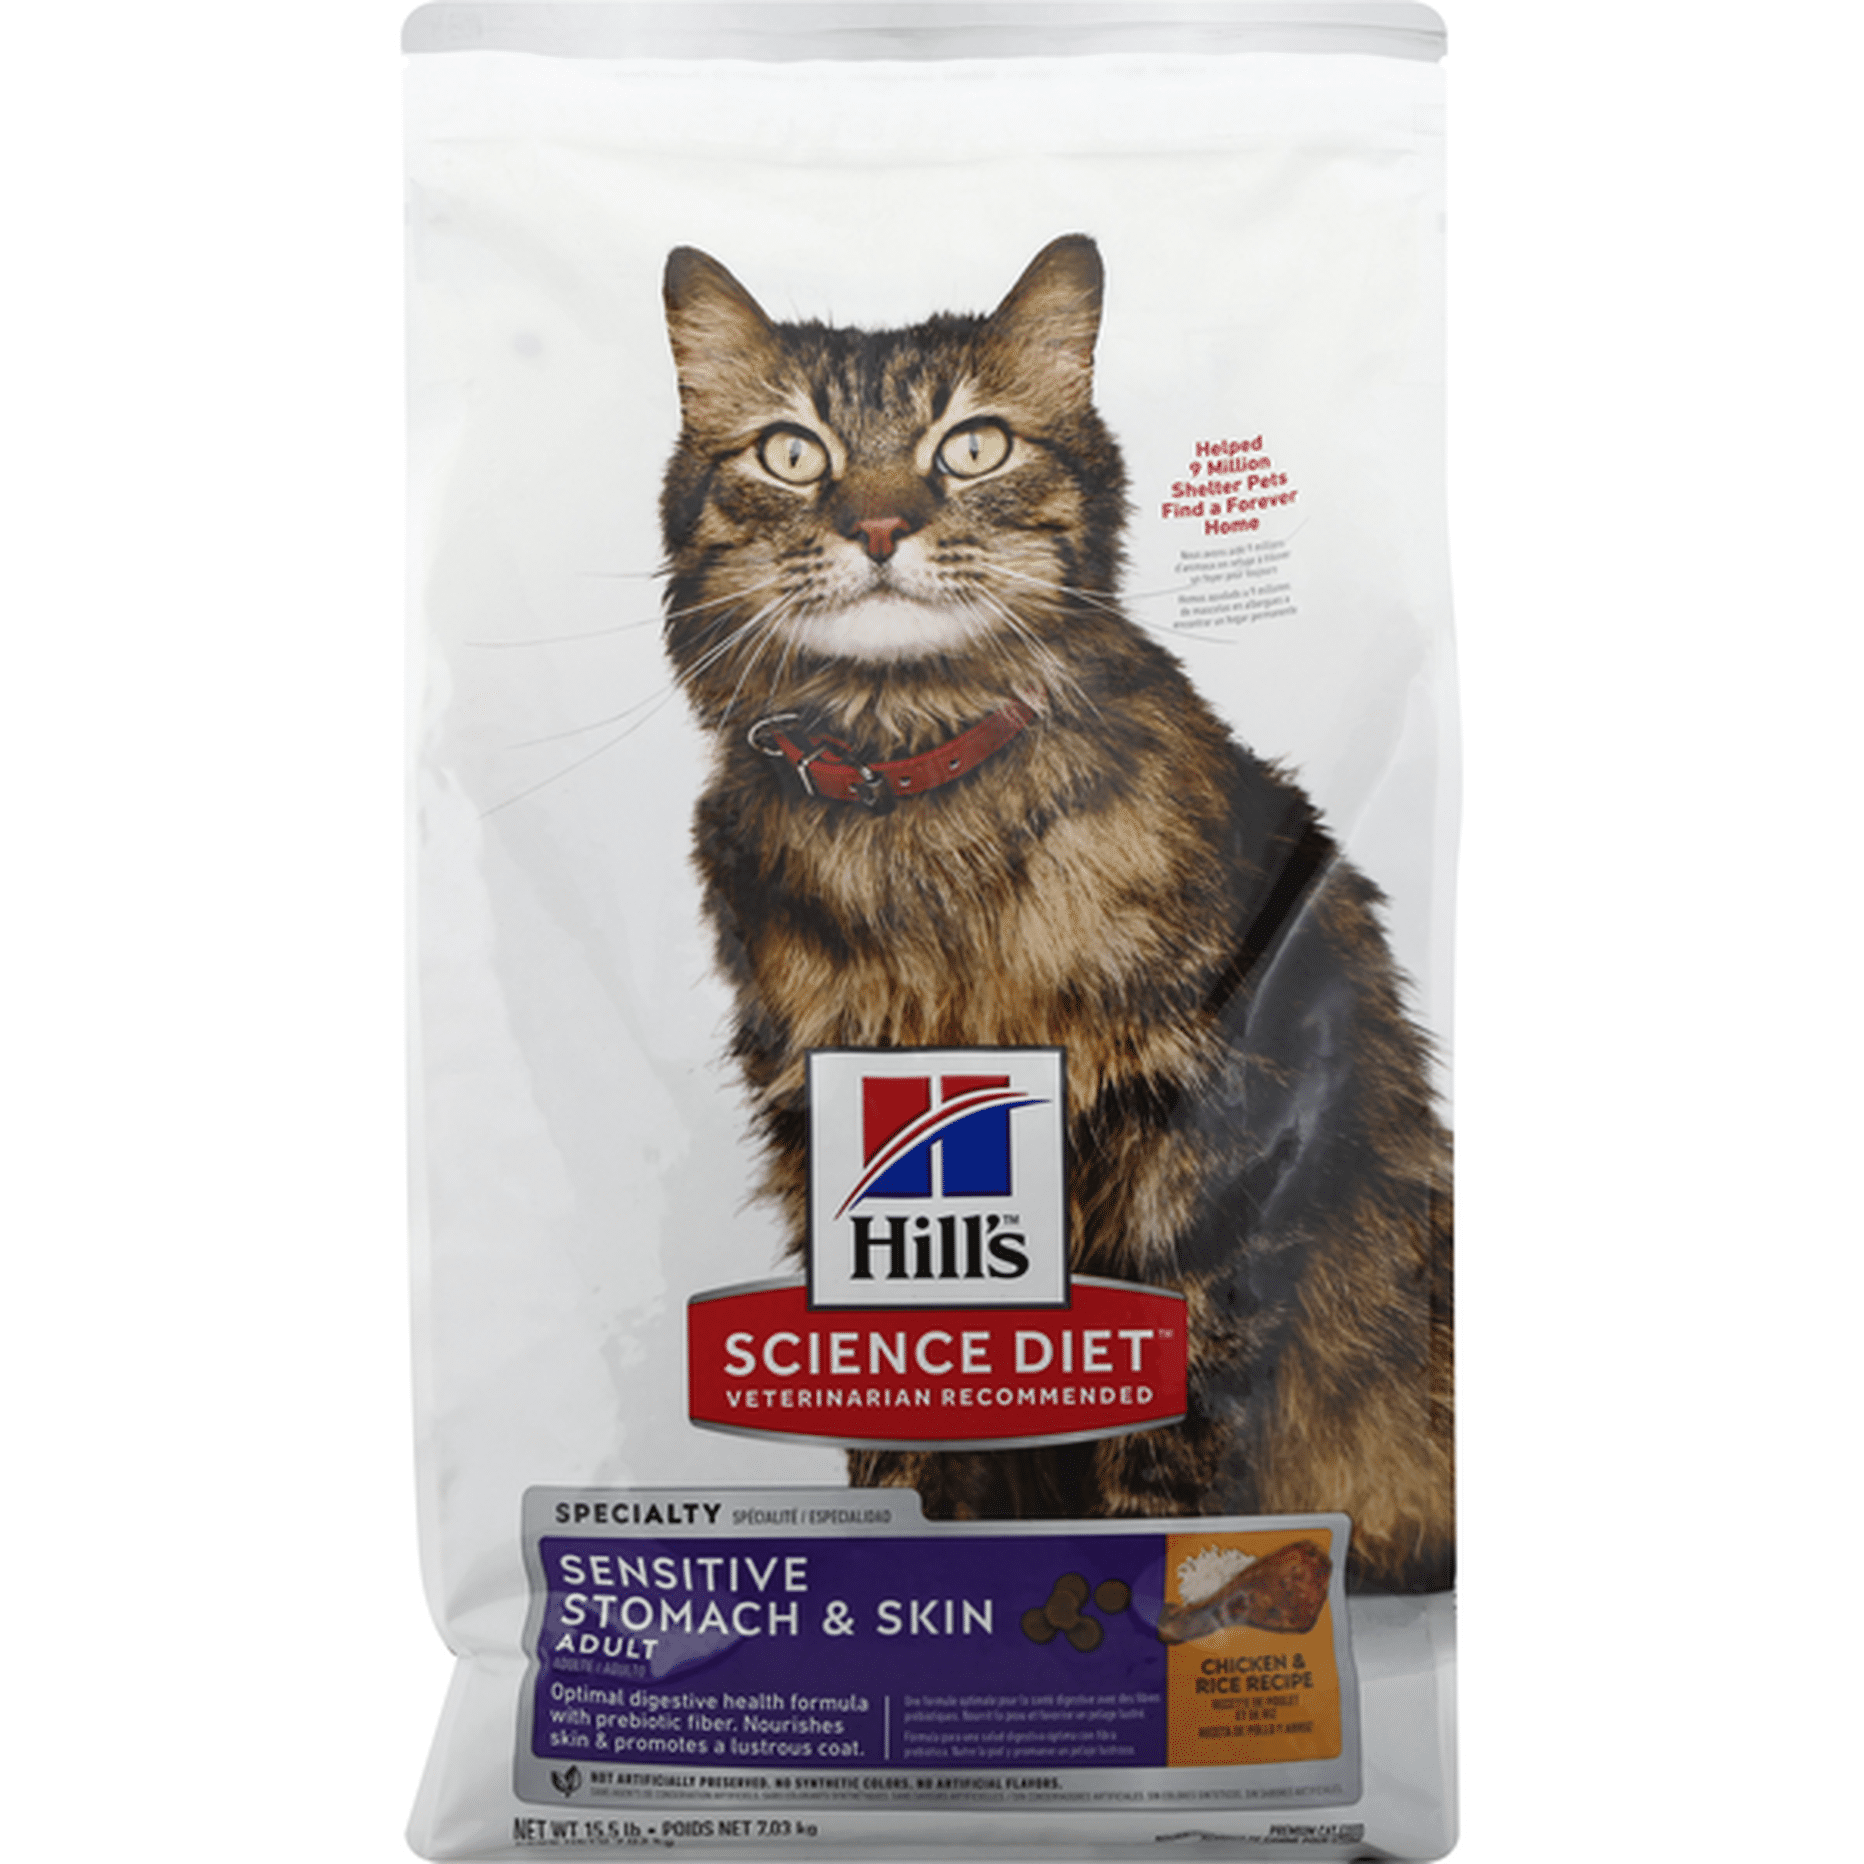 Hill's Science Diet Cat Food, Premium, Sensitive Stomach & Skin, Adult